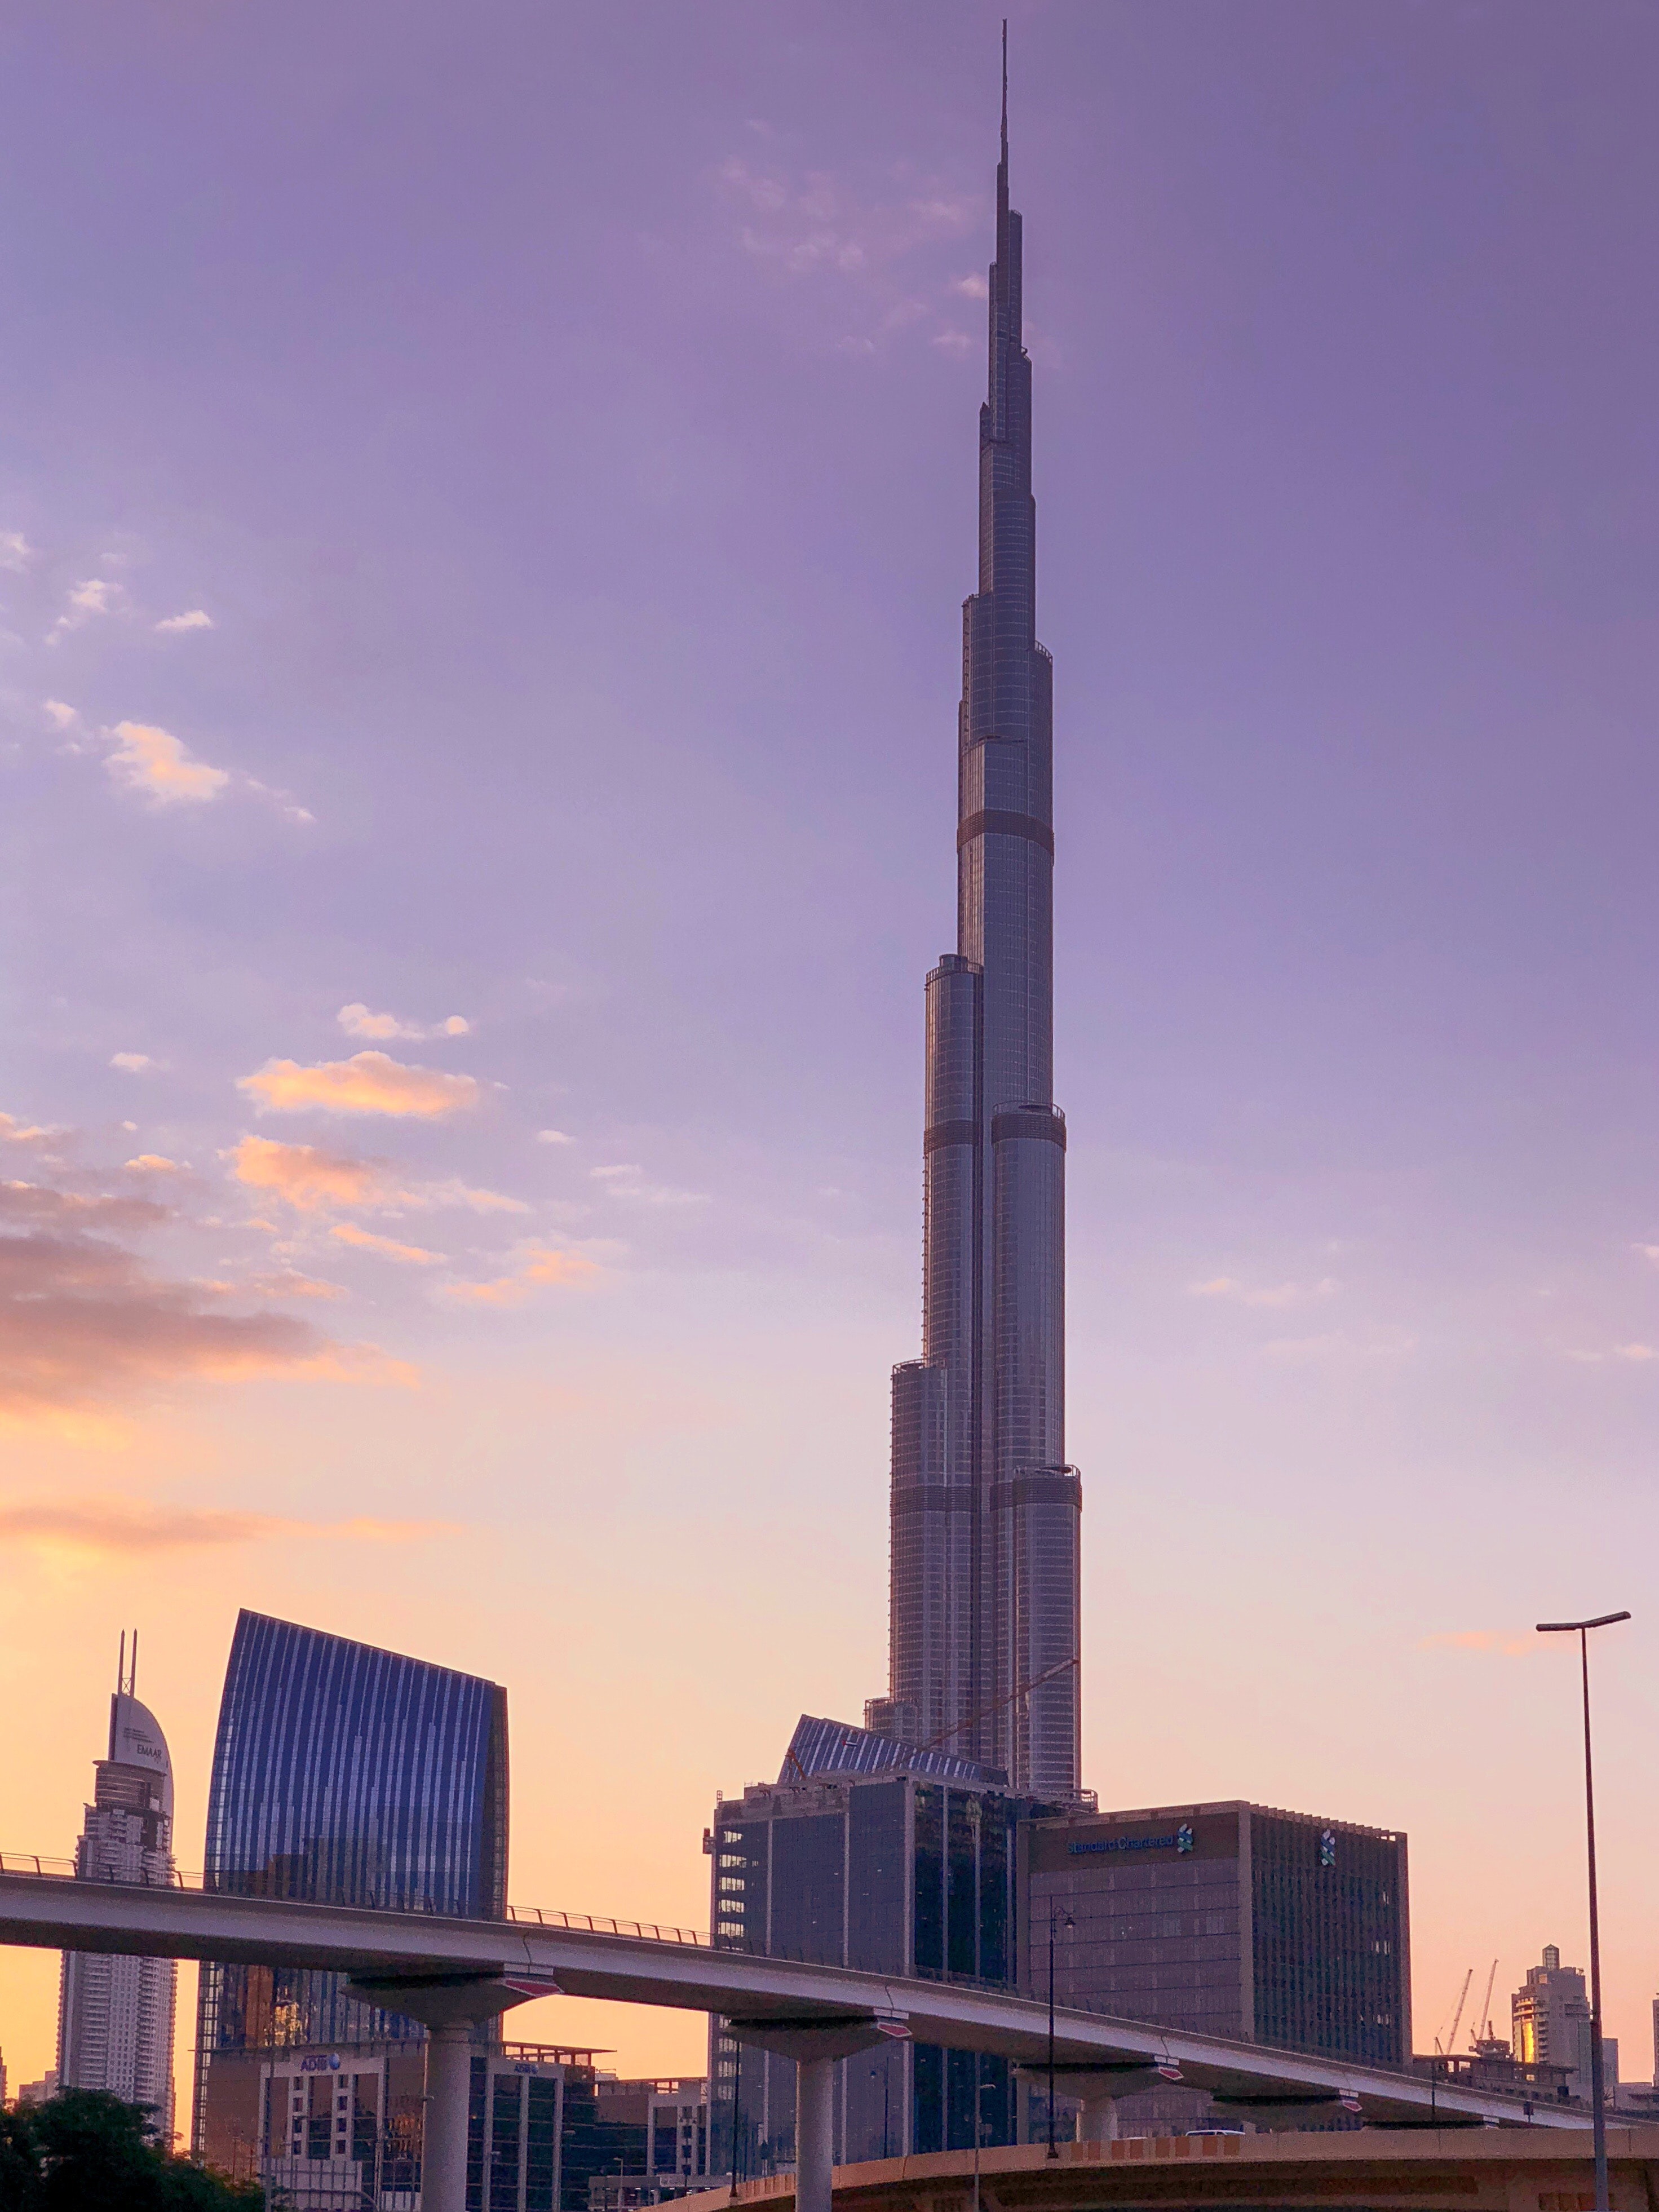 Free photo: Burj Khalifa - Architecture, Tower, Tourist attraction